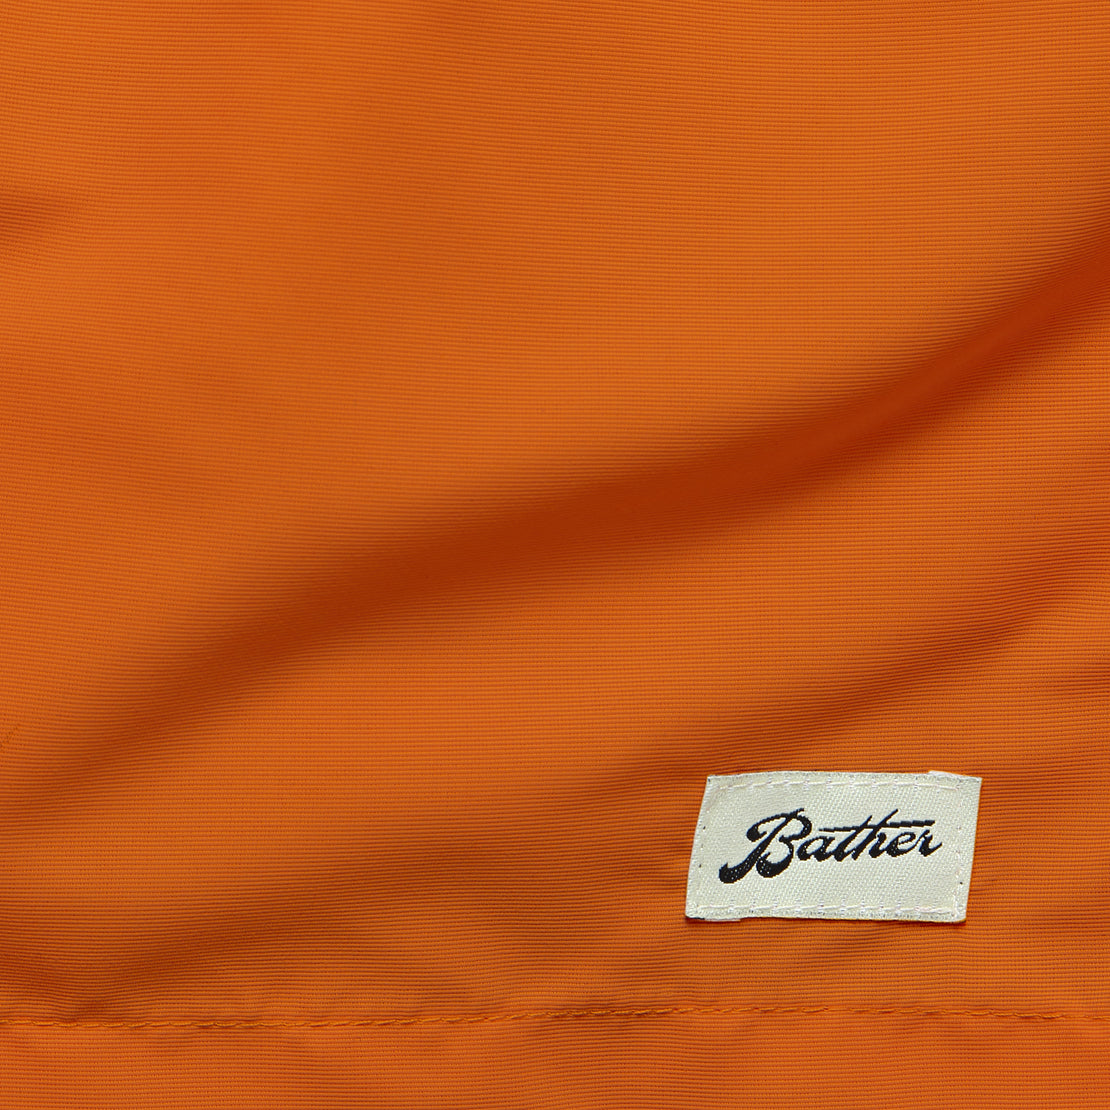 Solid Swim Trunk - Orange - Bather - STAG Provisions - Shorts - Swim